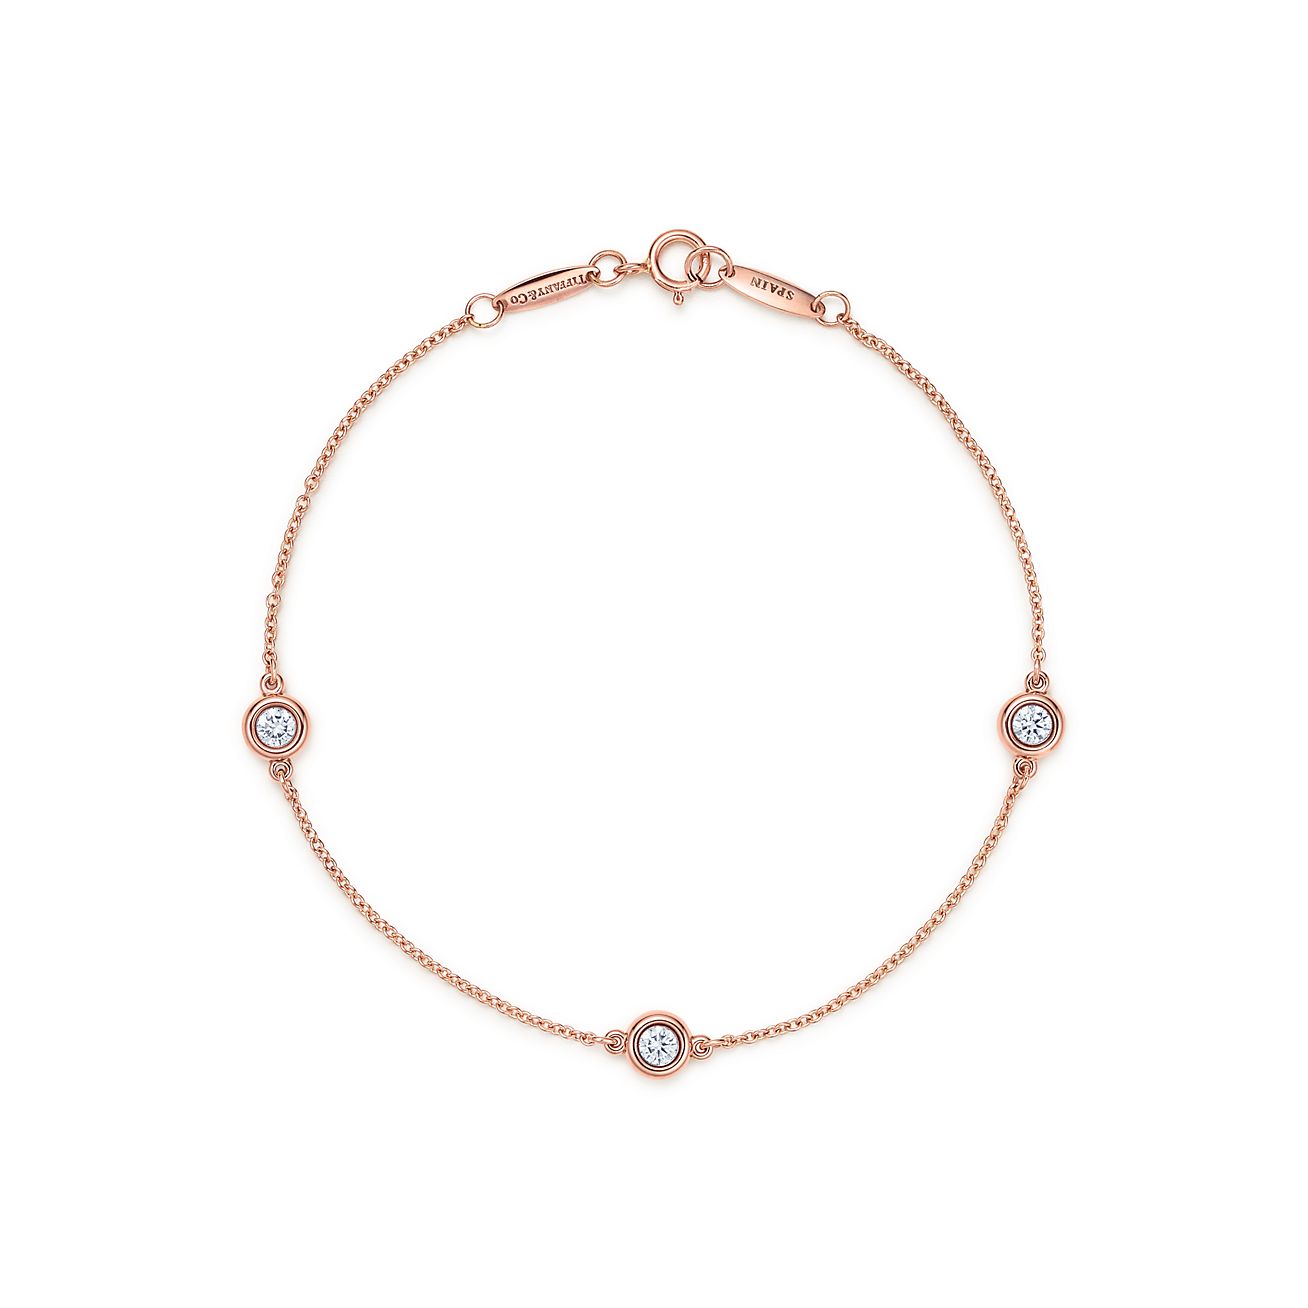 Elsa Peretti Pearls by The Yard Bracelet in Sterling Silver, Size: Medium